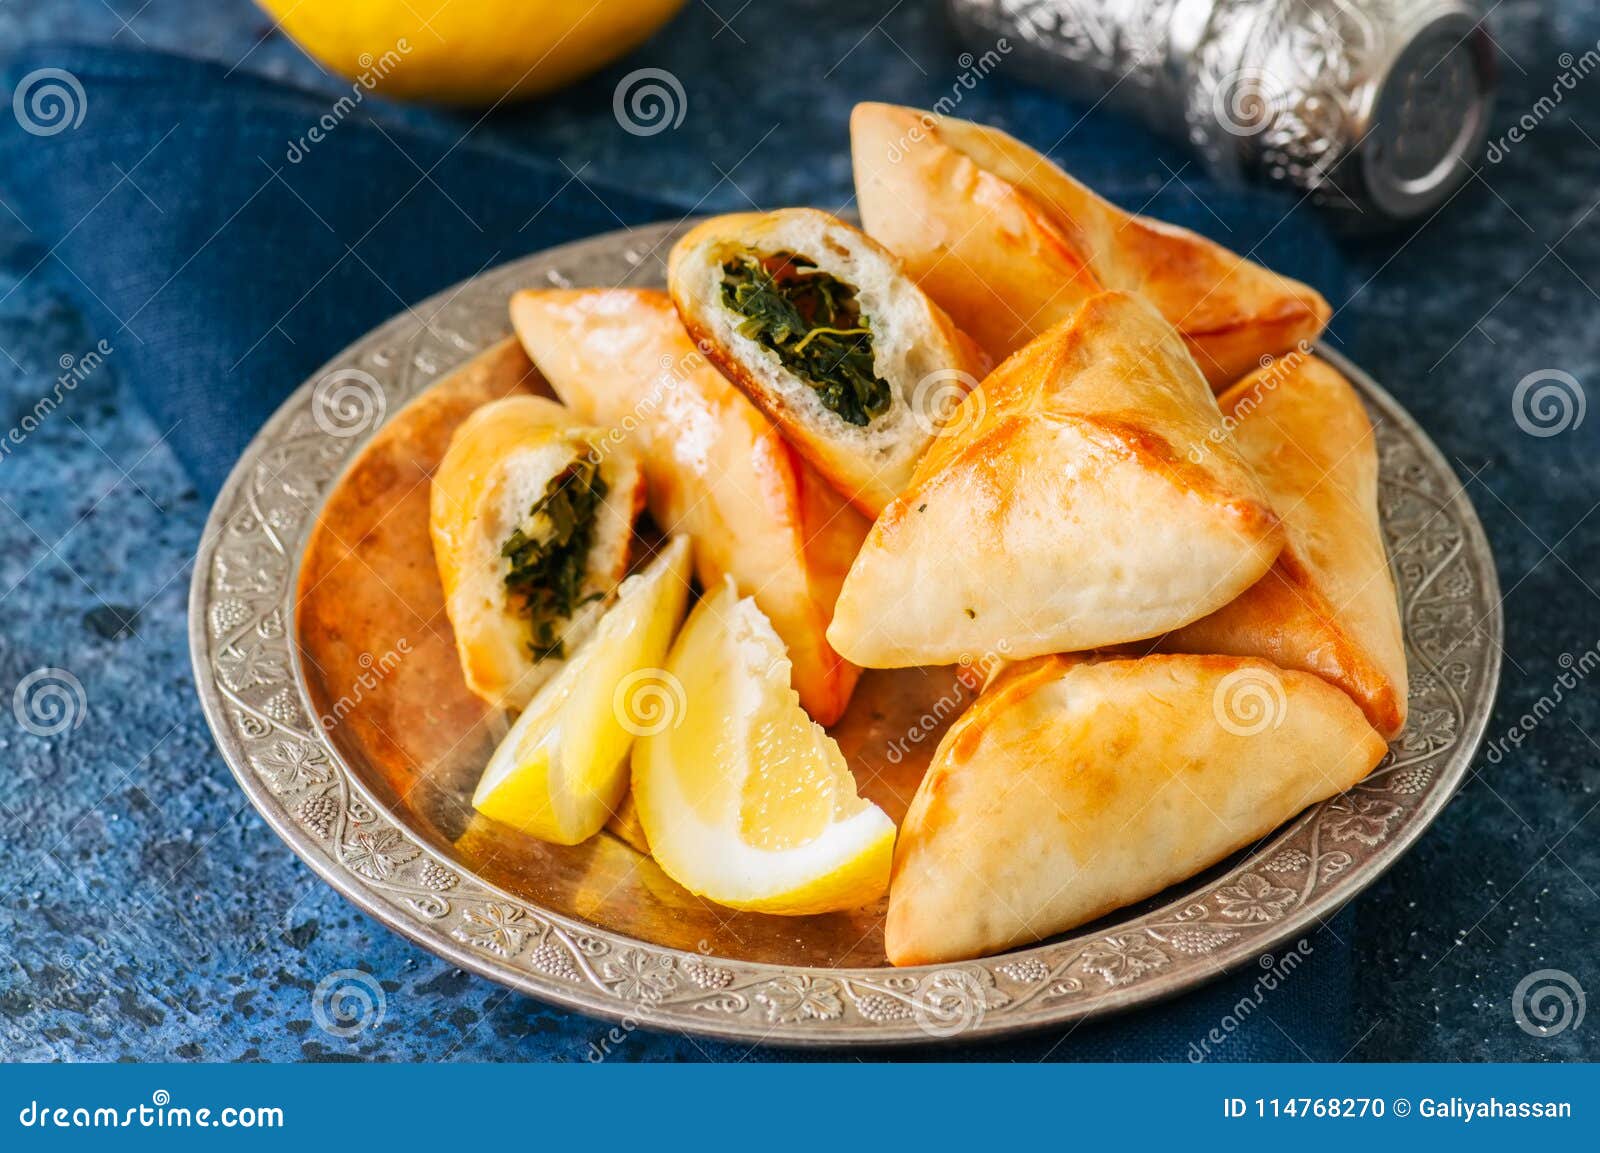 fatayer sabanekh - traditional arabic spinach triangle hand pies